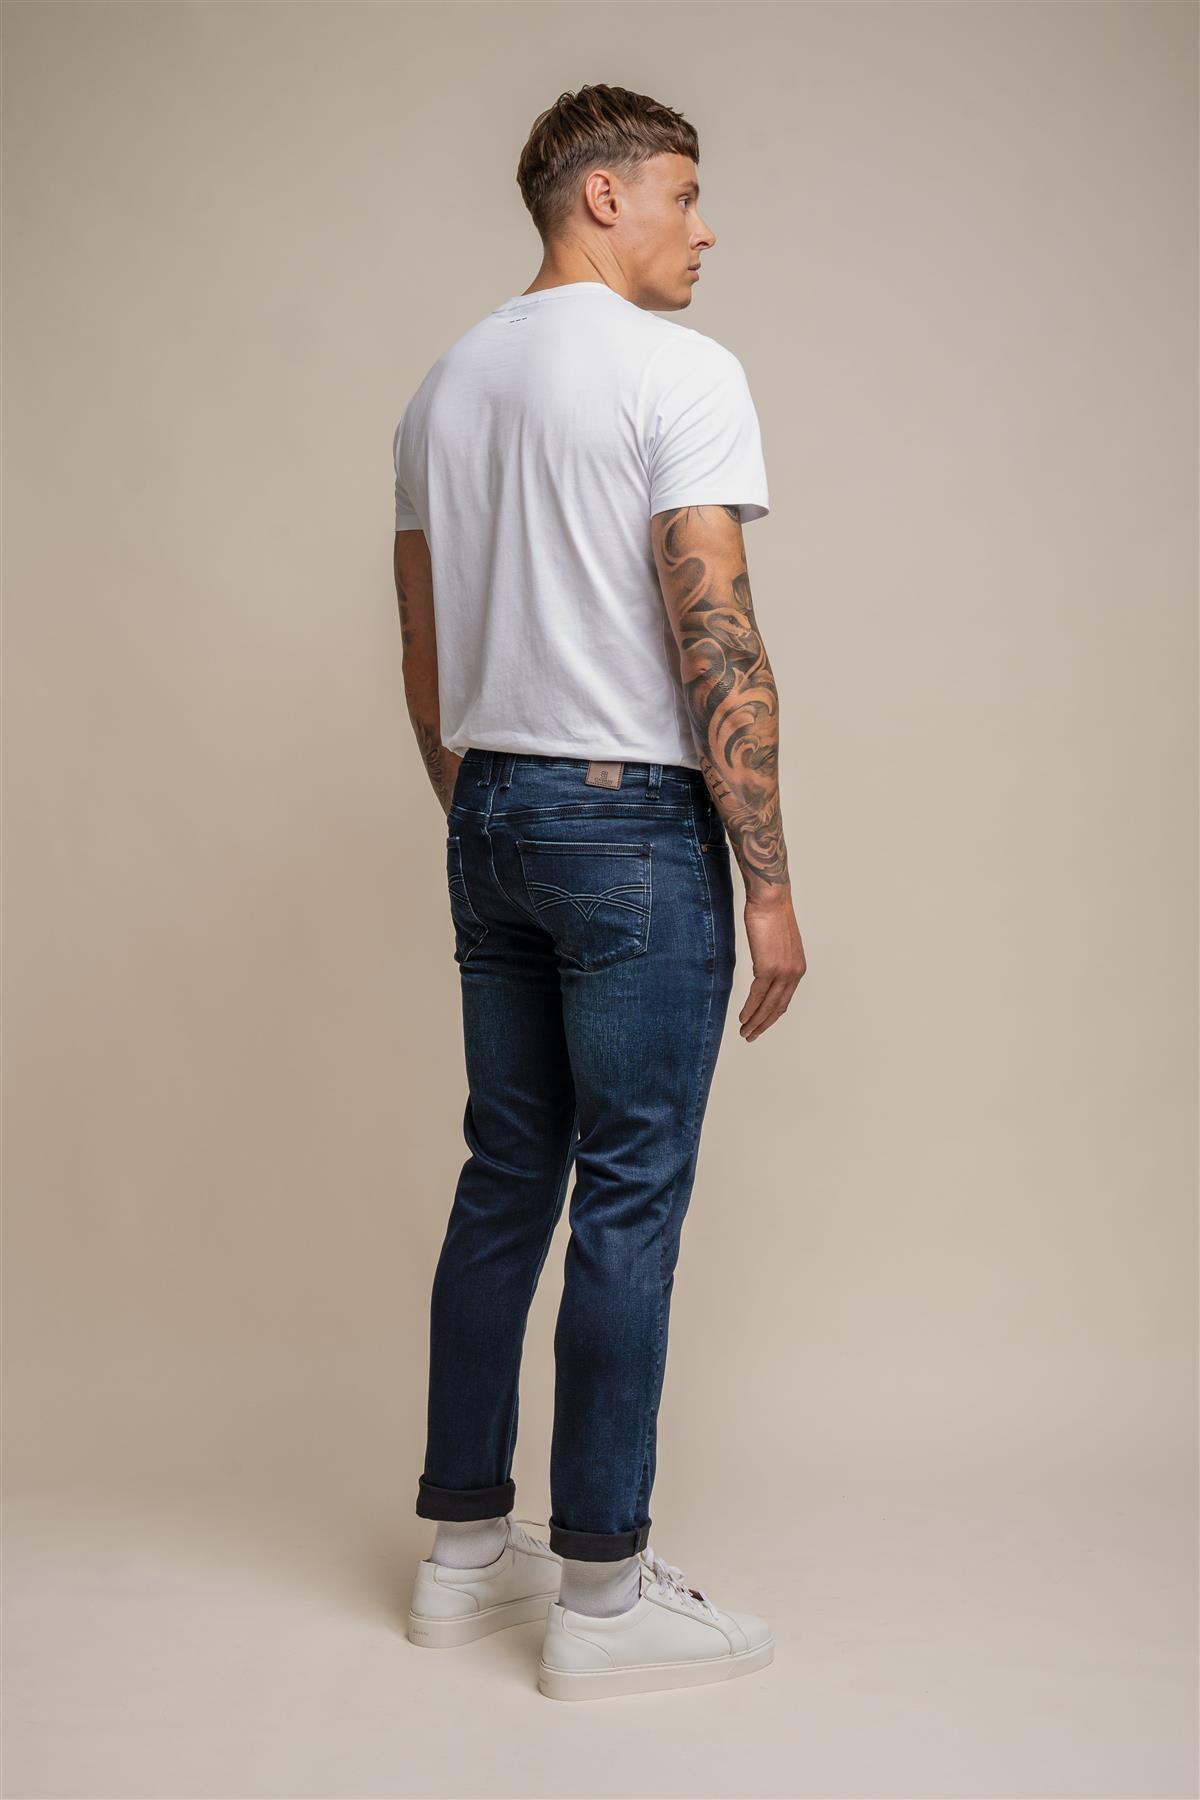 Elliot navy stretch slim fit jean back